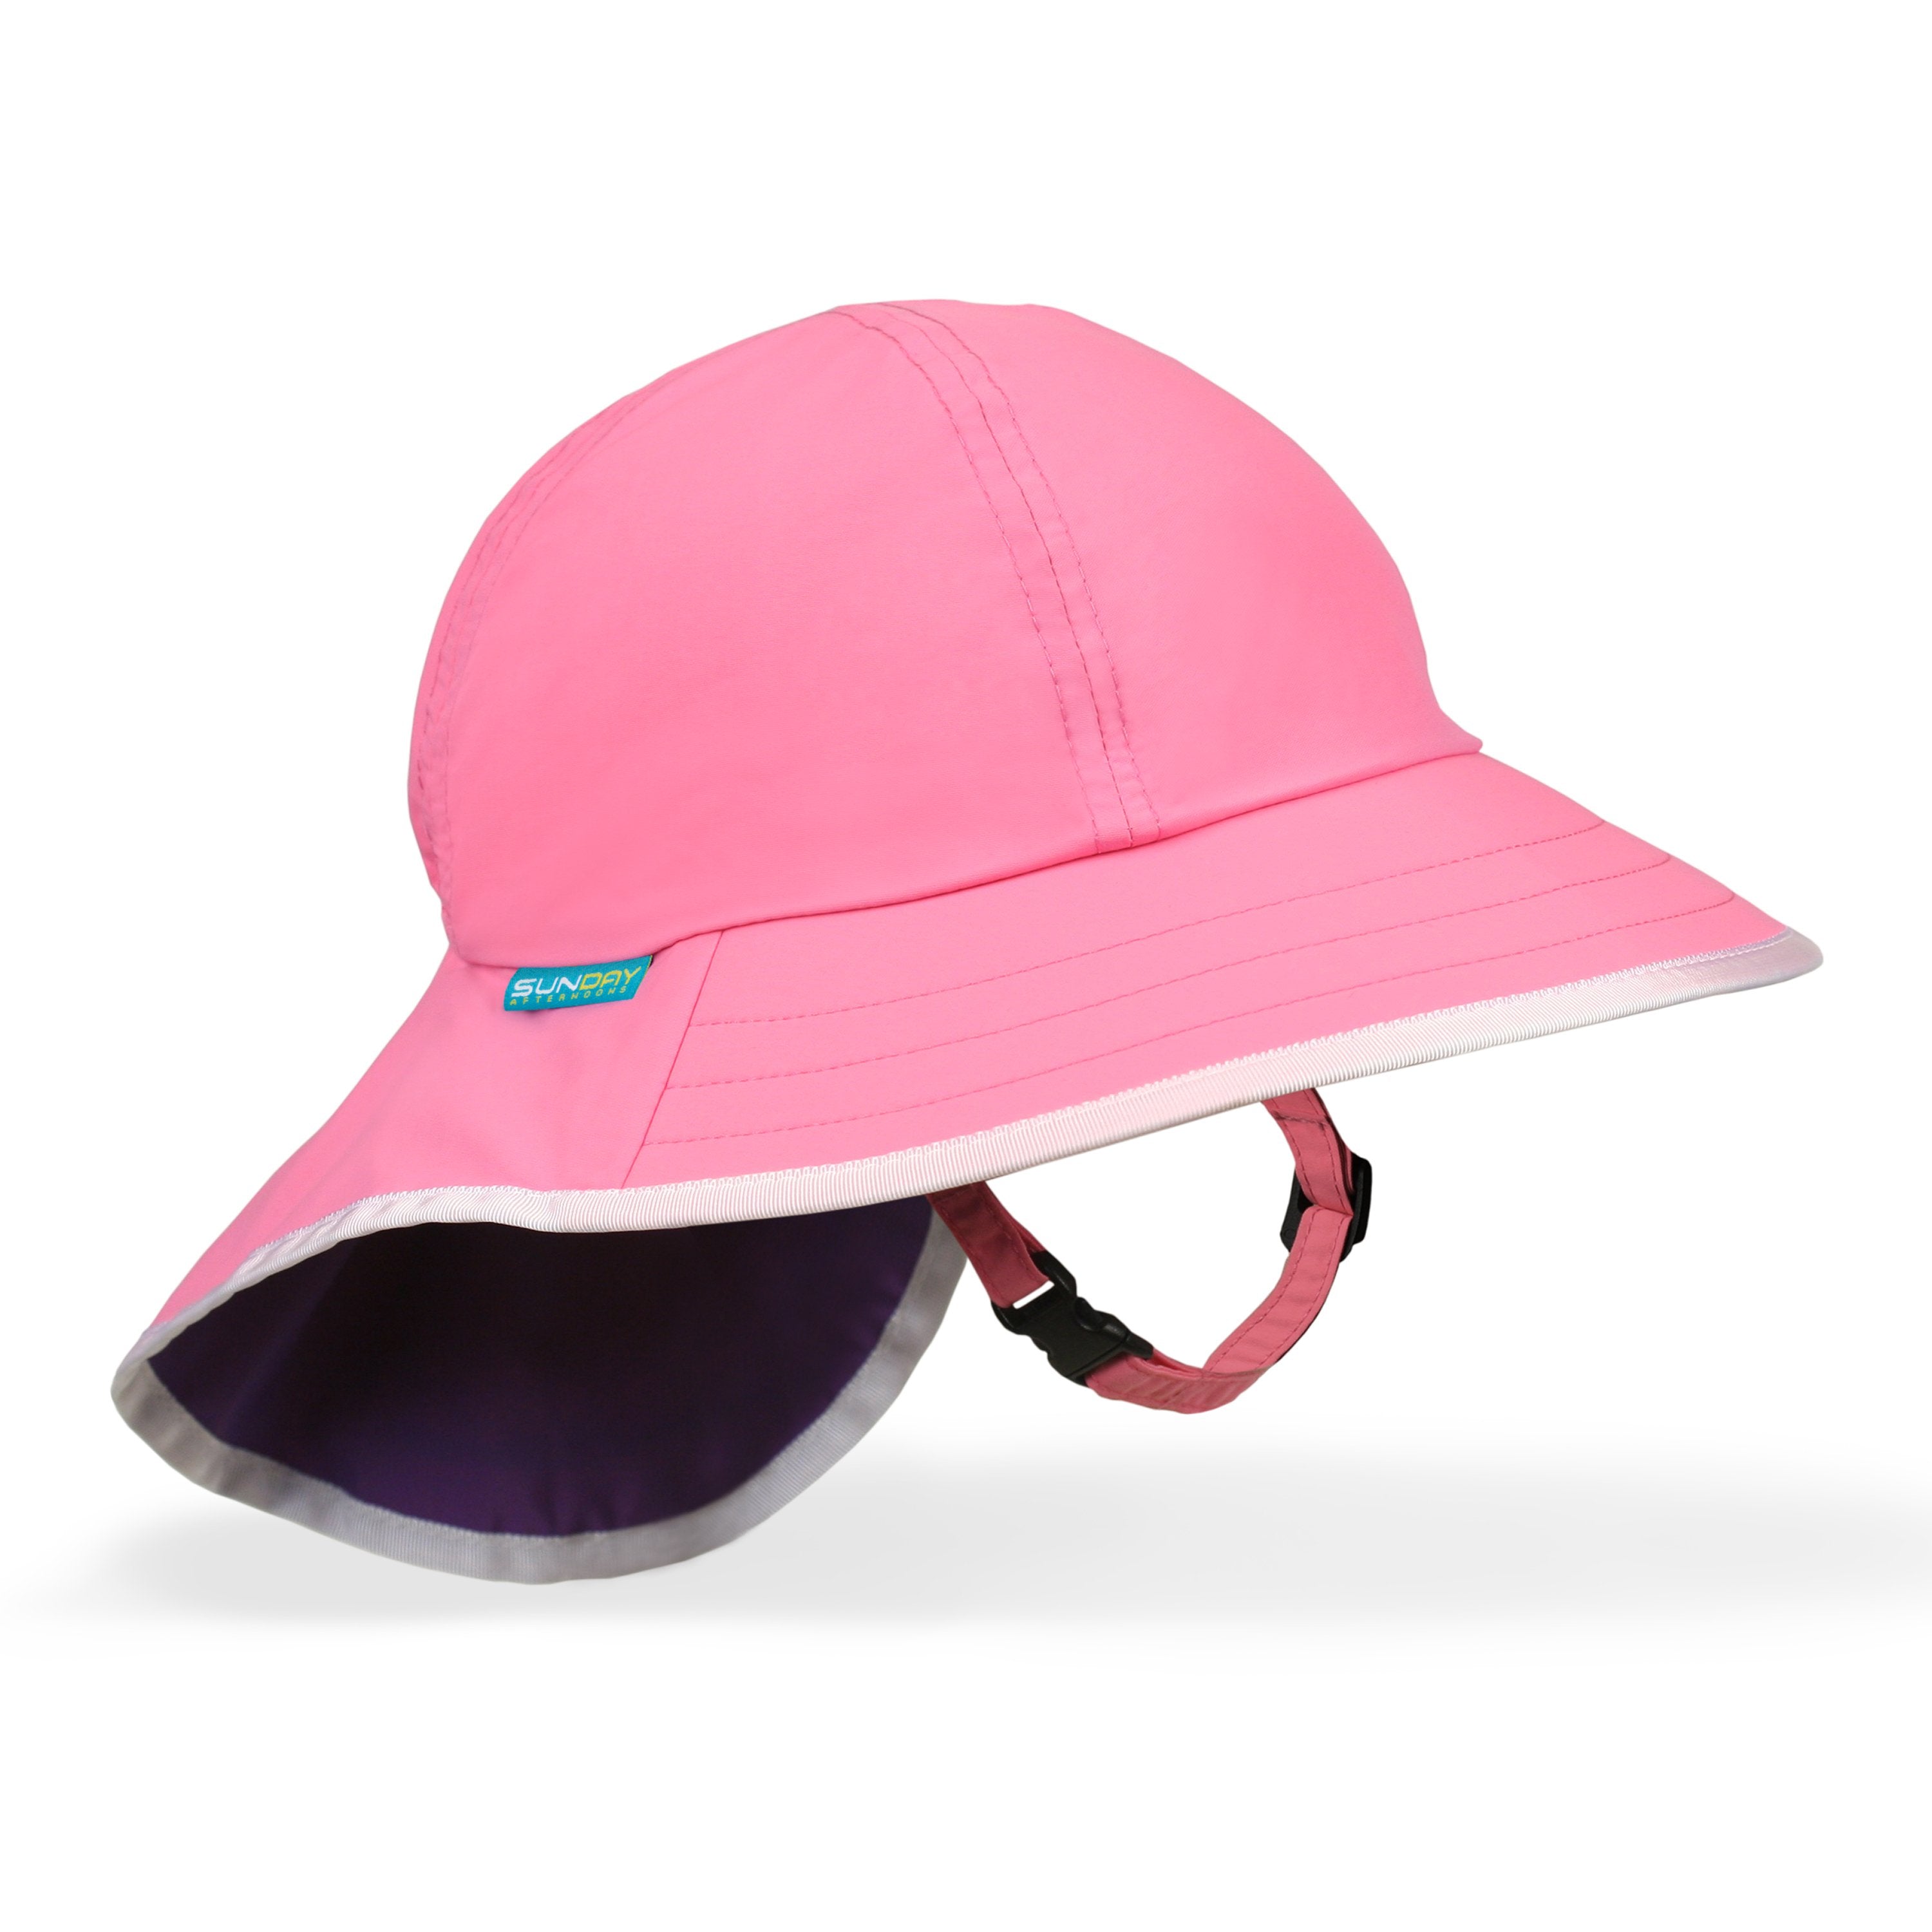 kids play hat pink sm ss16 3000px